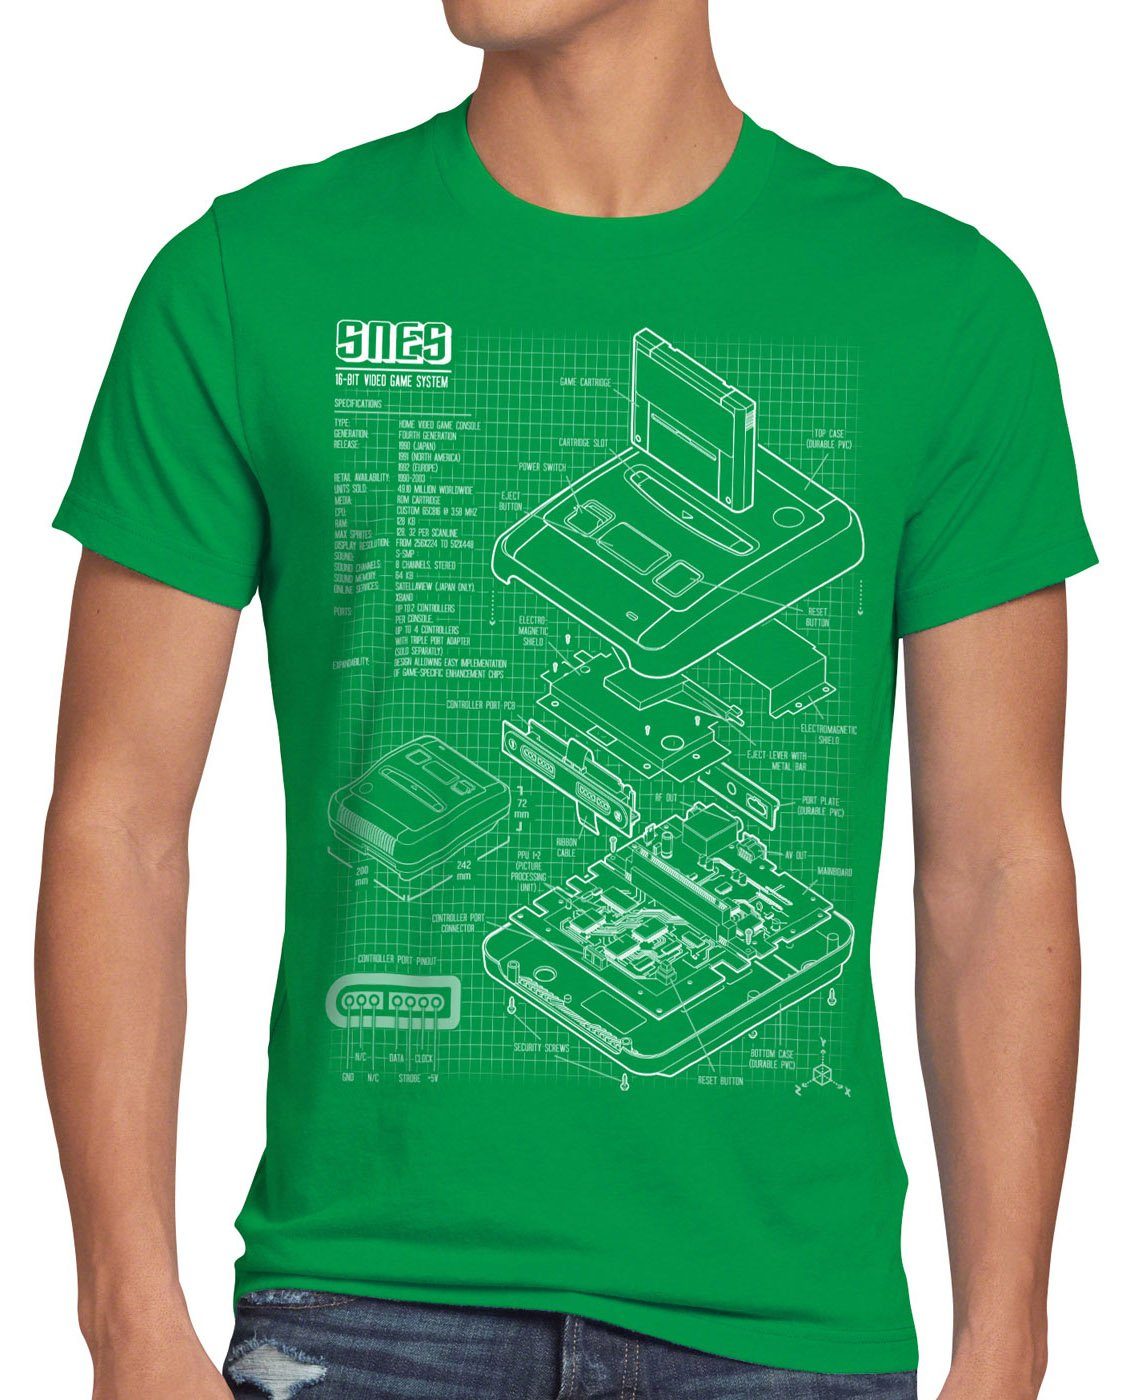 Videospiel grün Print-Shirt 16-Bit T-Shirt SNES Blaupause style3 Herren